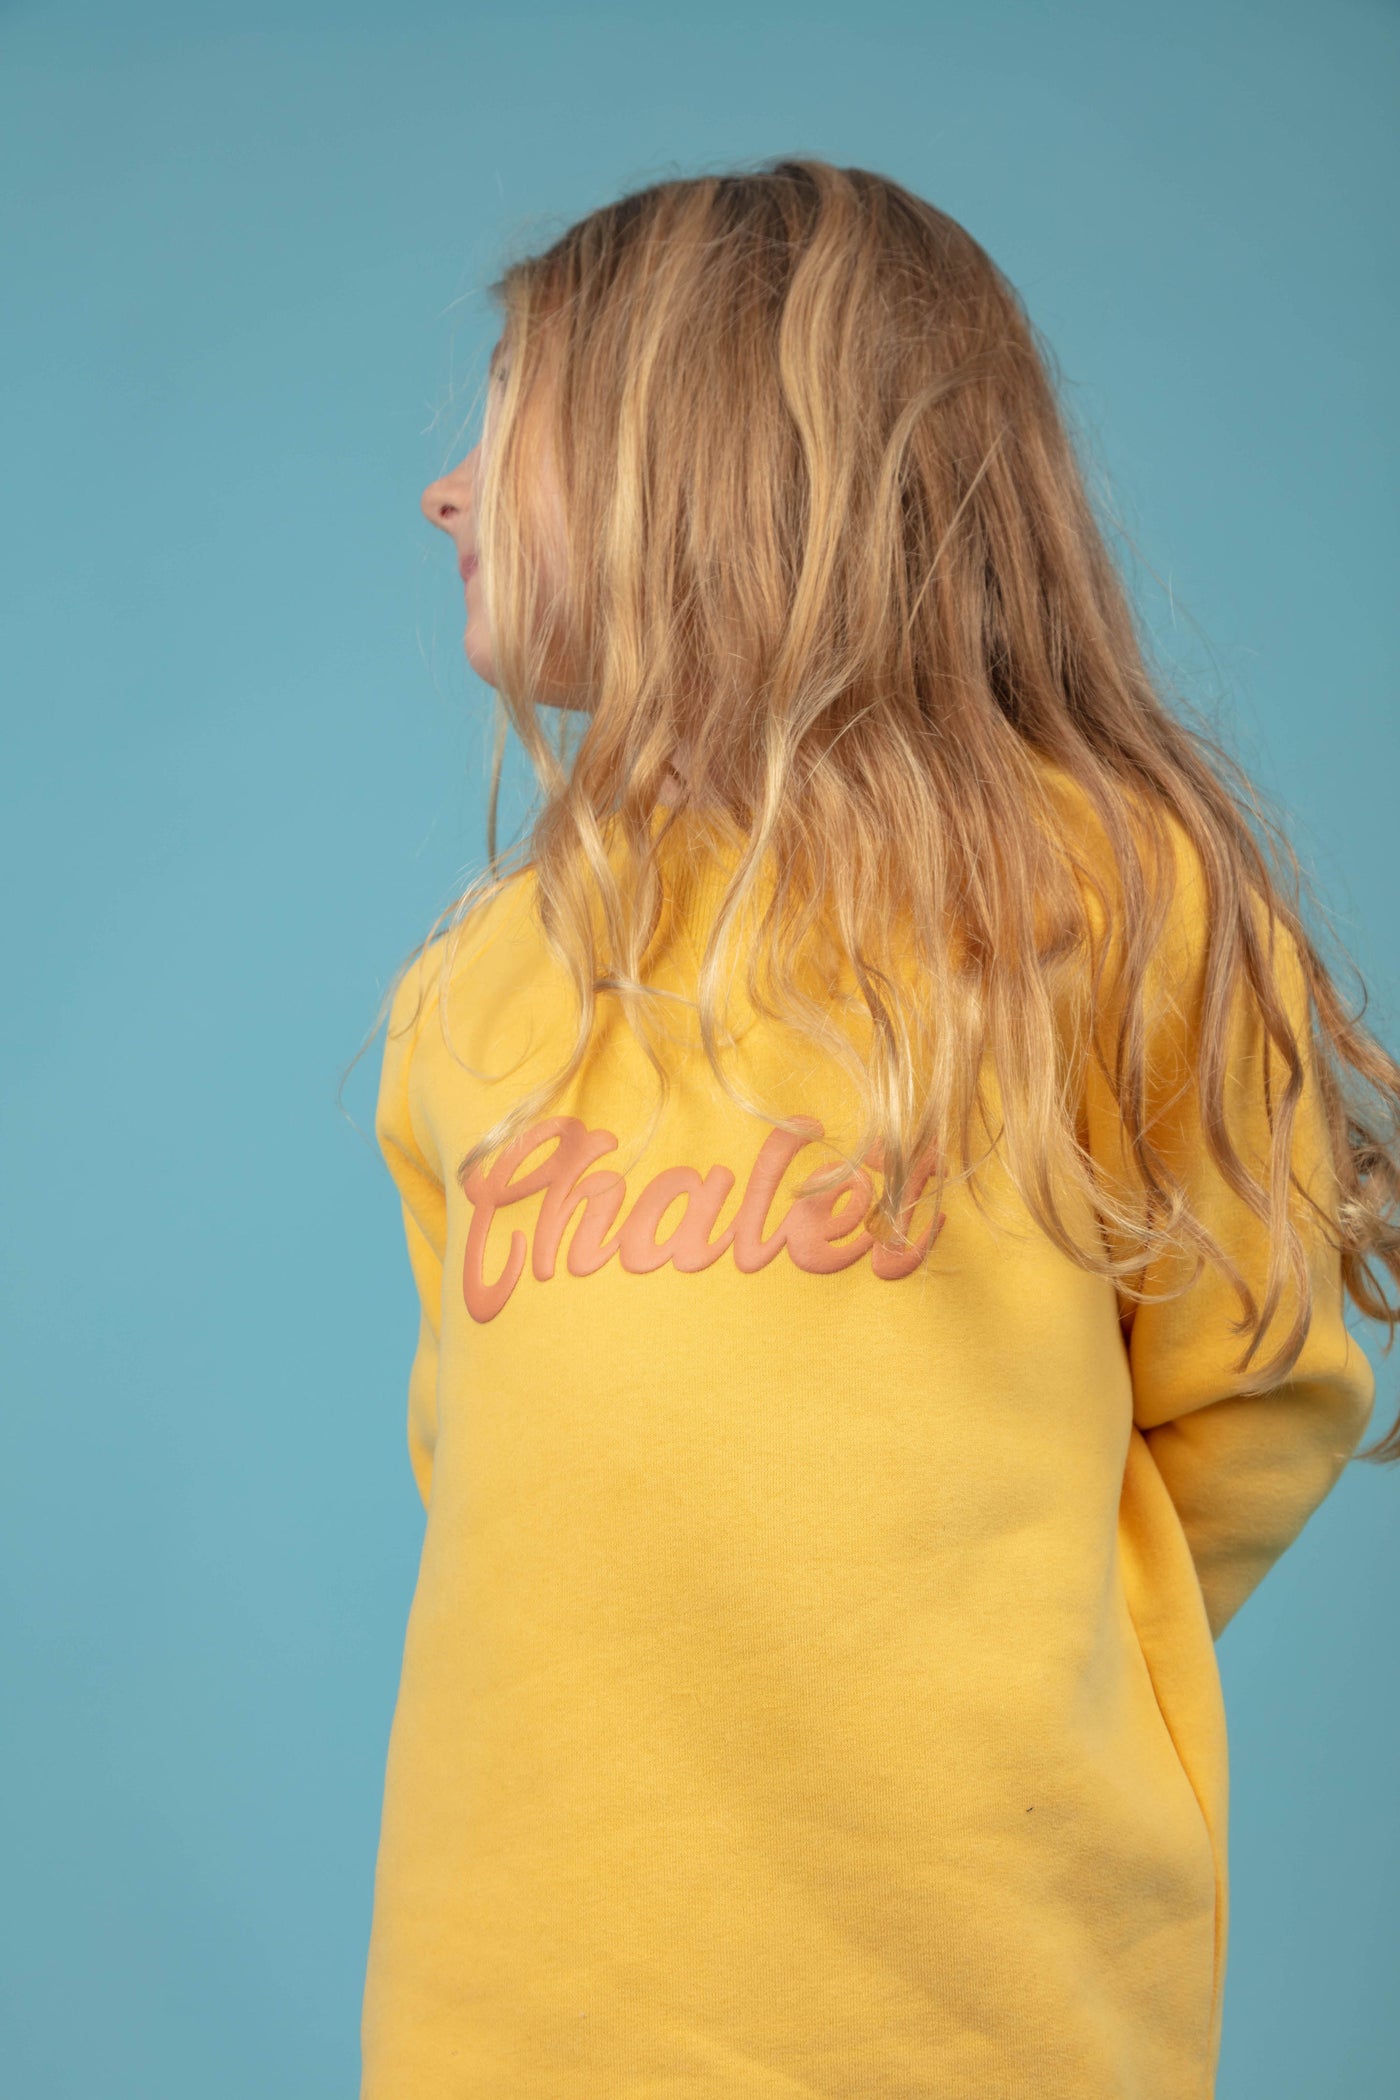 Chalet Sweat |Yellow| Kidz